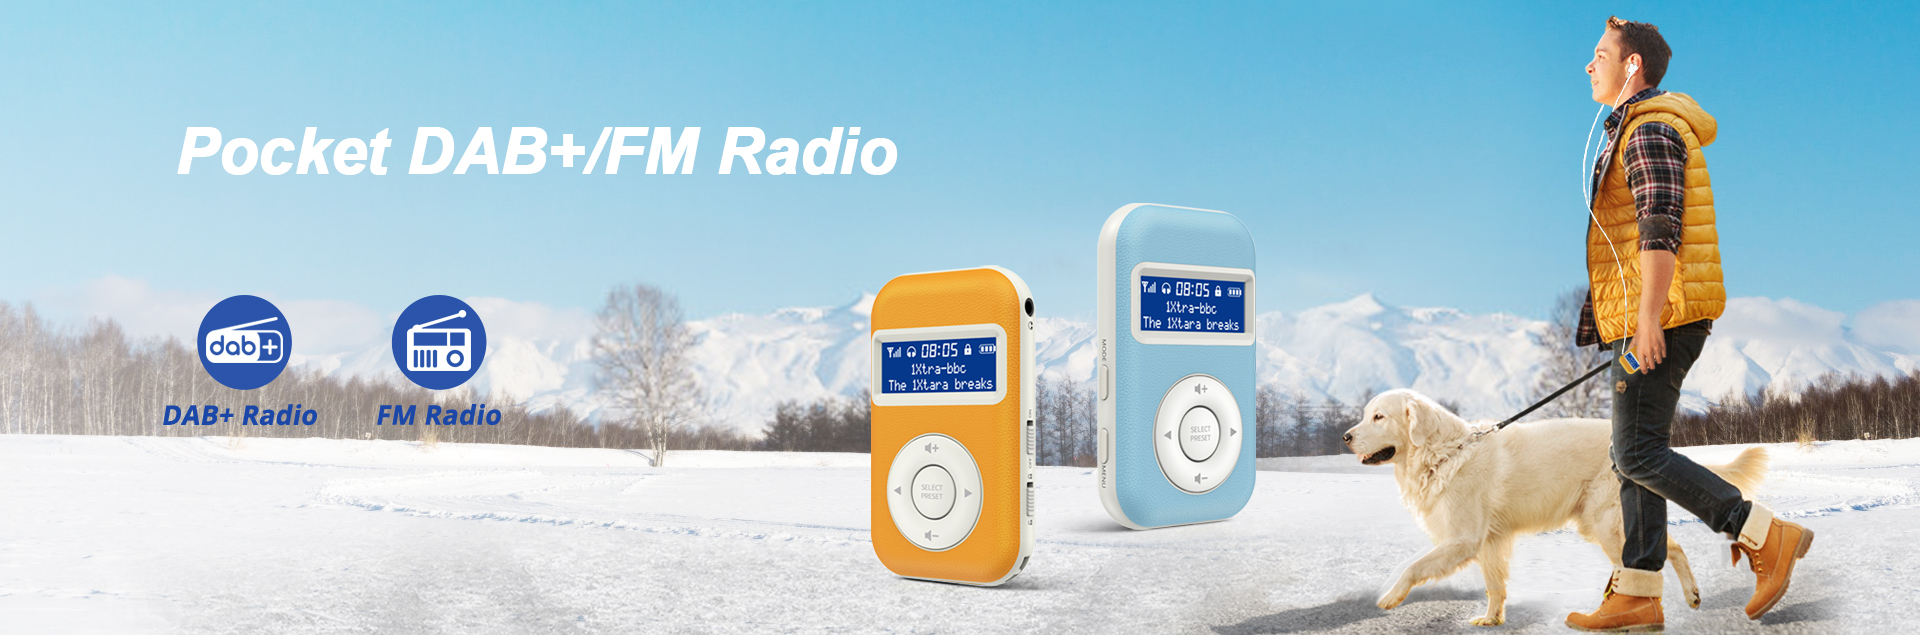 Pocket DAB+/FM Radio